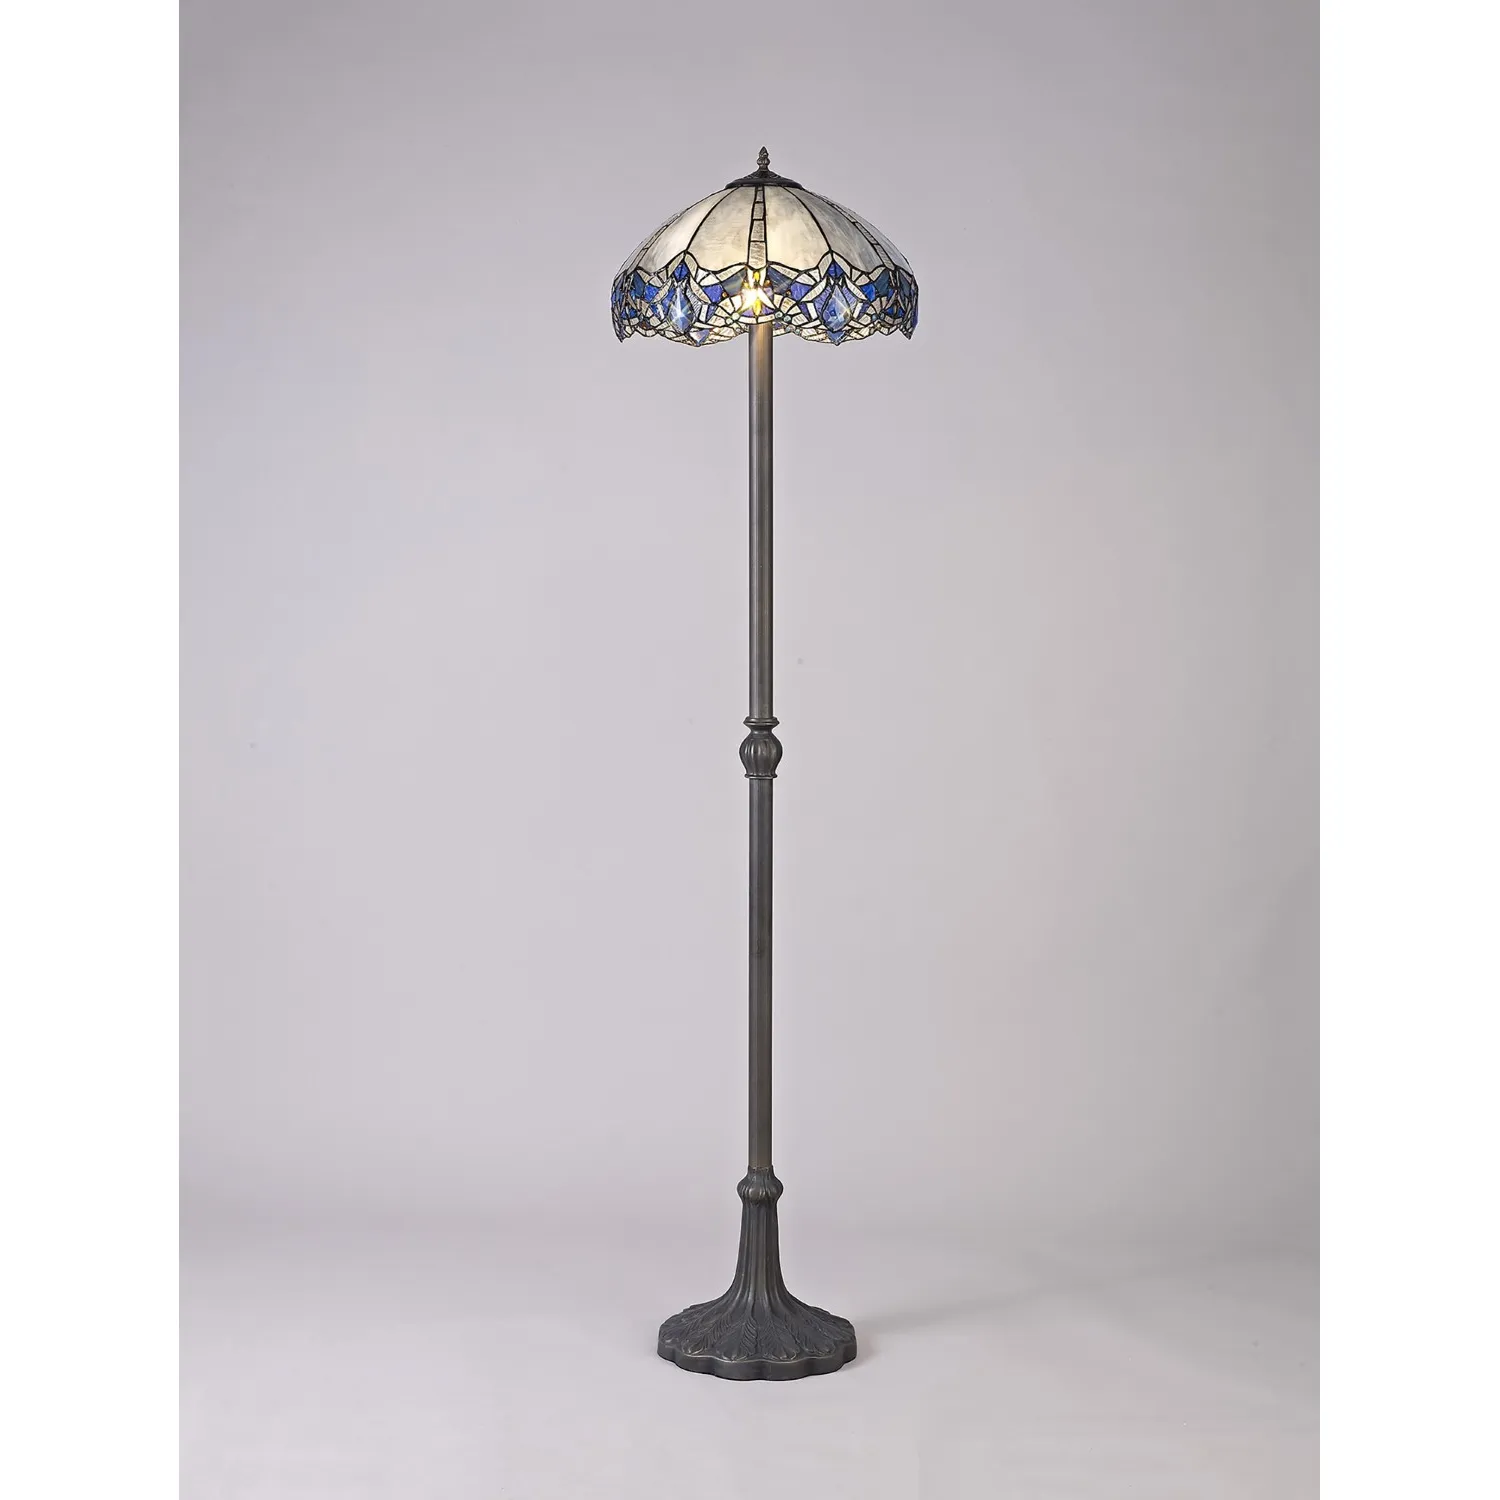 Ardingly 2 Light Leaf Design Floor Lamp E27 With 40cm Tiffany Shade, Blue Clear Crystal Aged Antique Brass